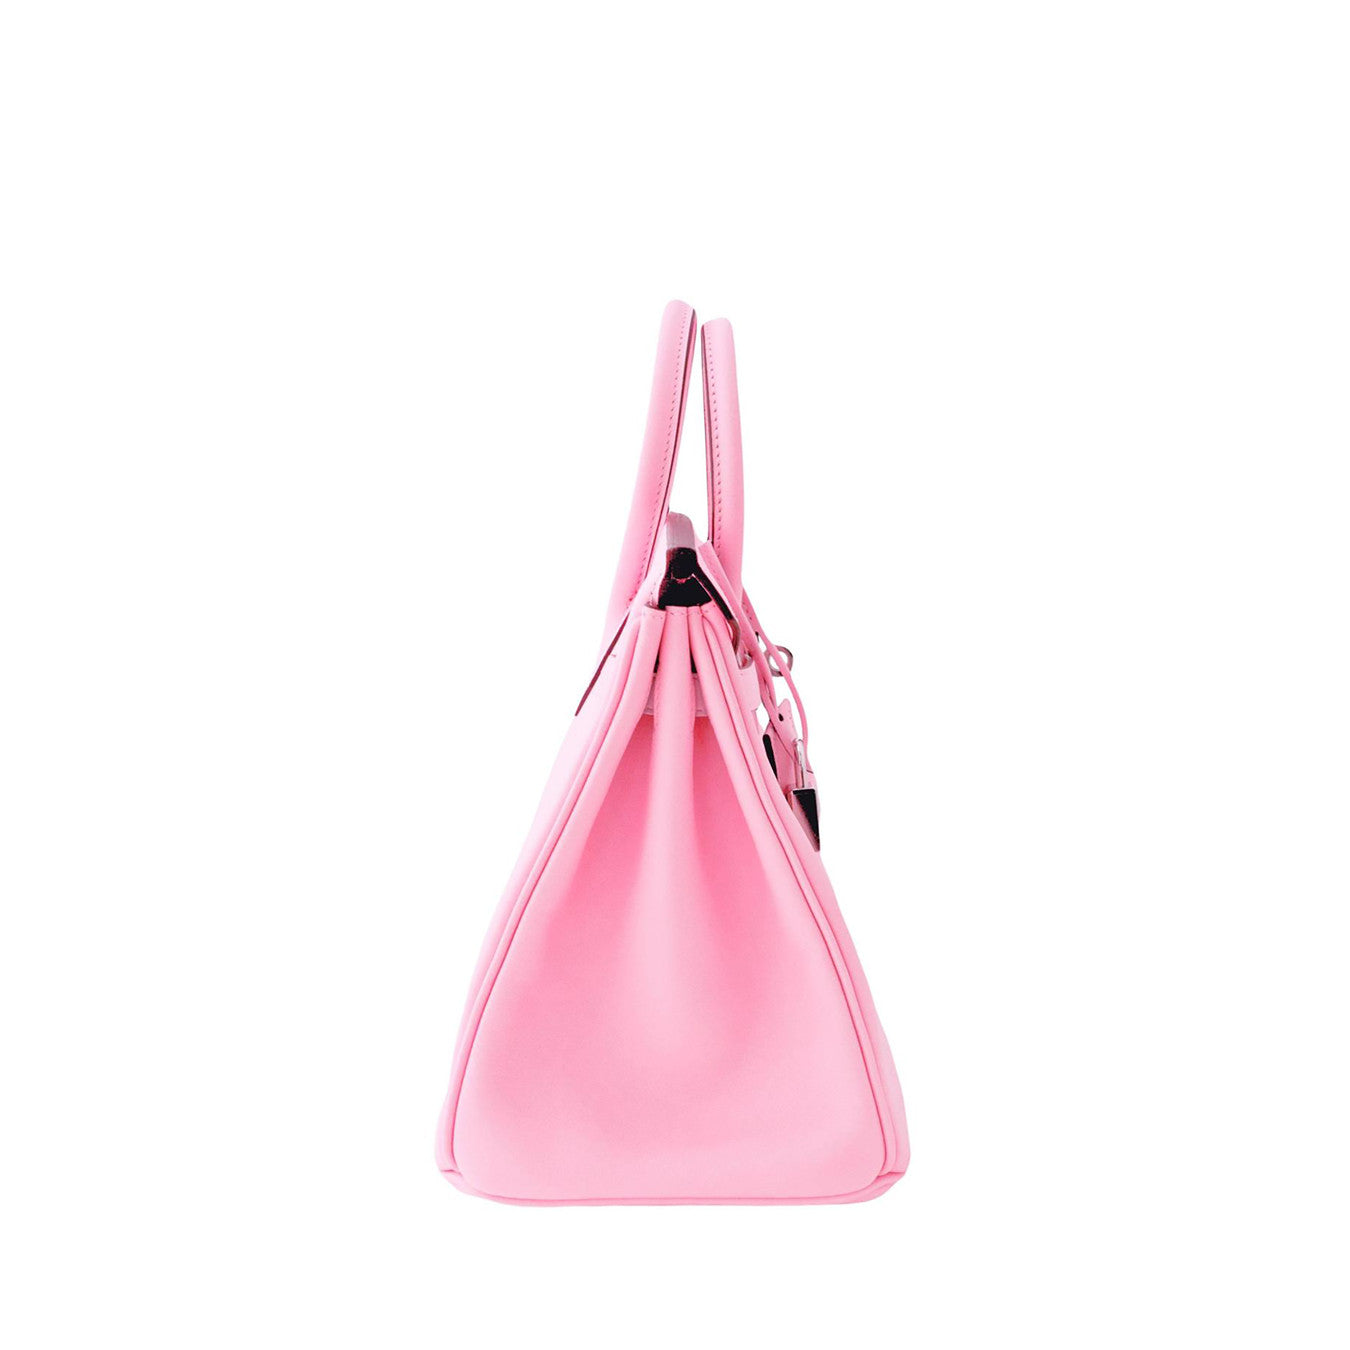 Hermes Rose Sakura Pink 25cm Swift Leather Birkin Satchel Bag